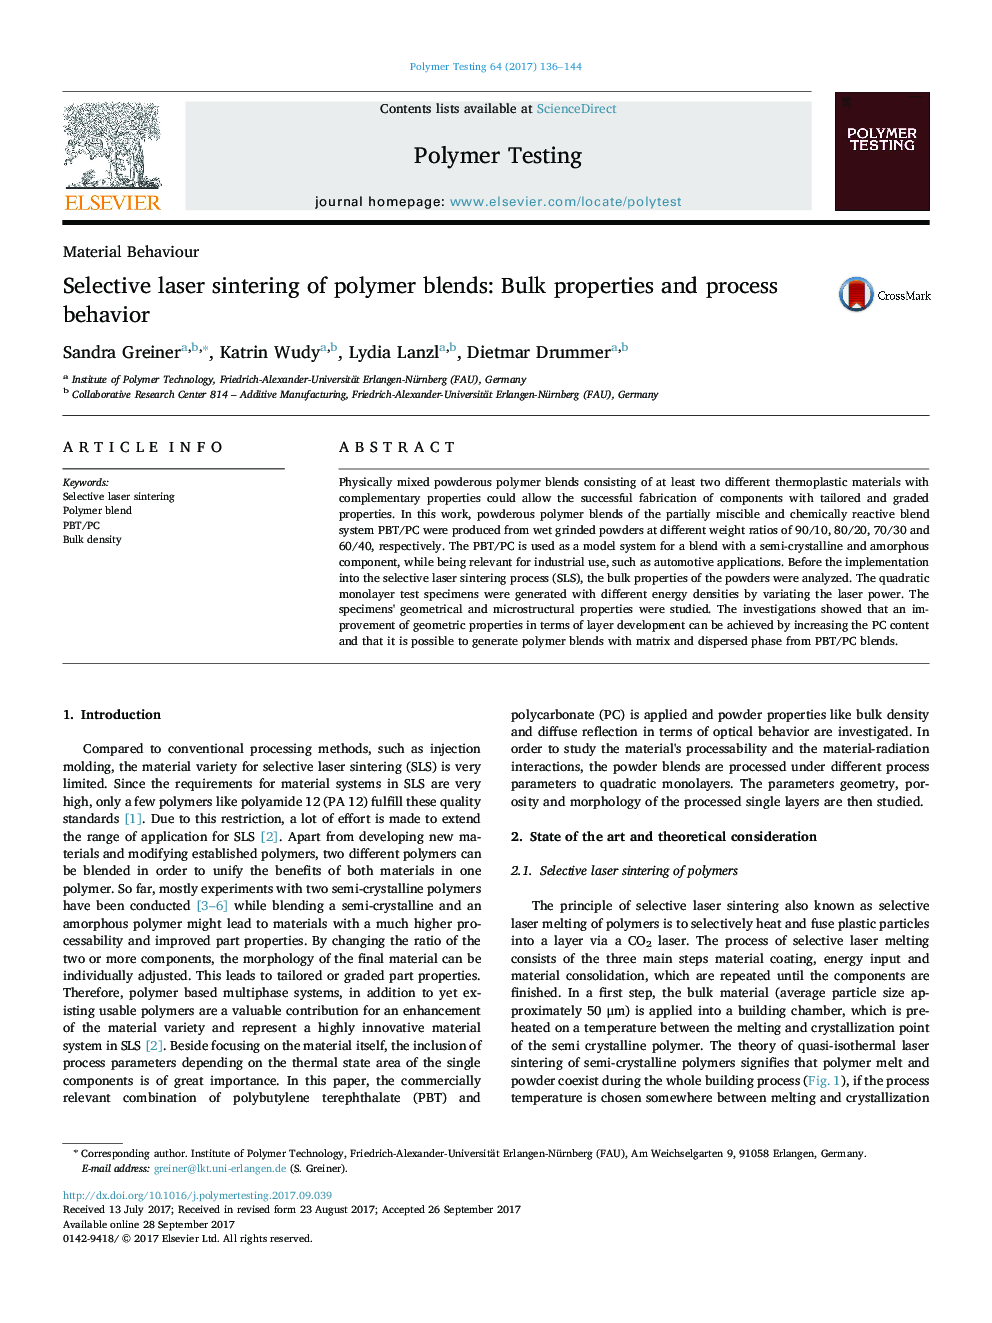 Material BehaviourSelective laser sintering of polymer blends: Bulk properties and process behavior